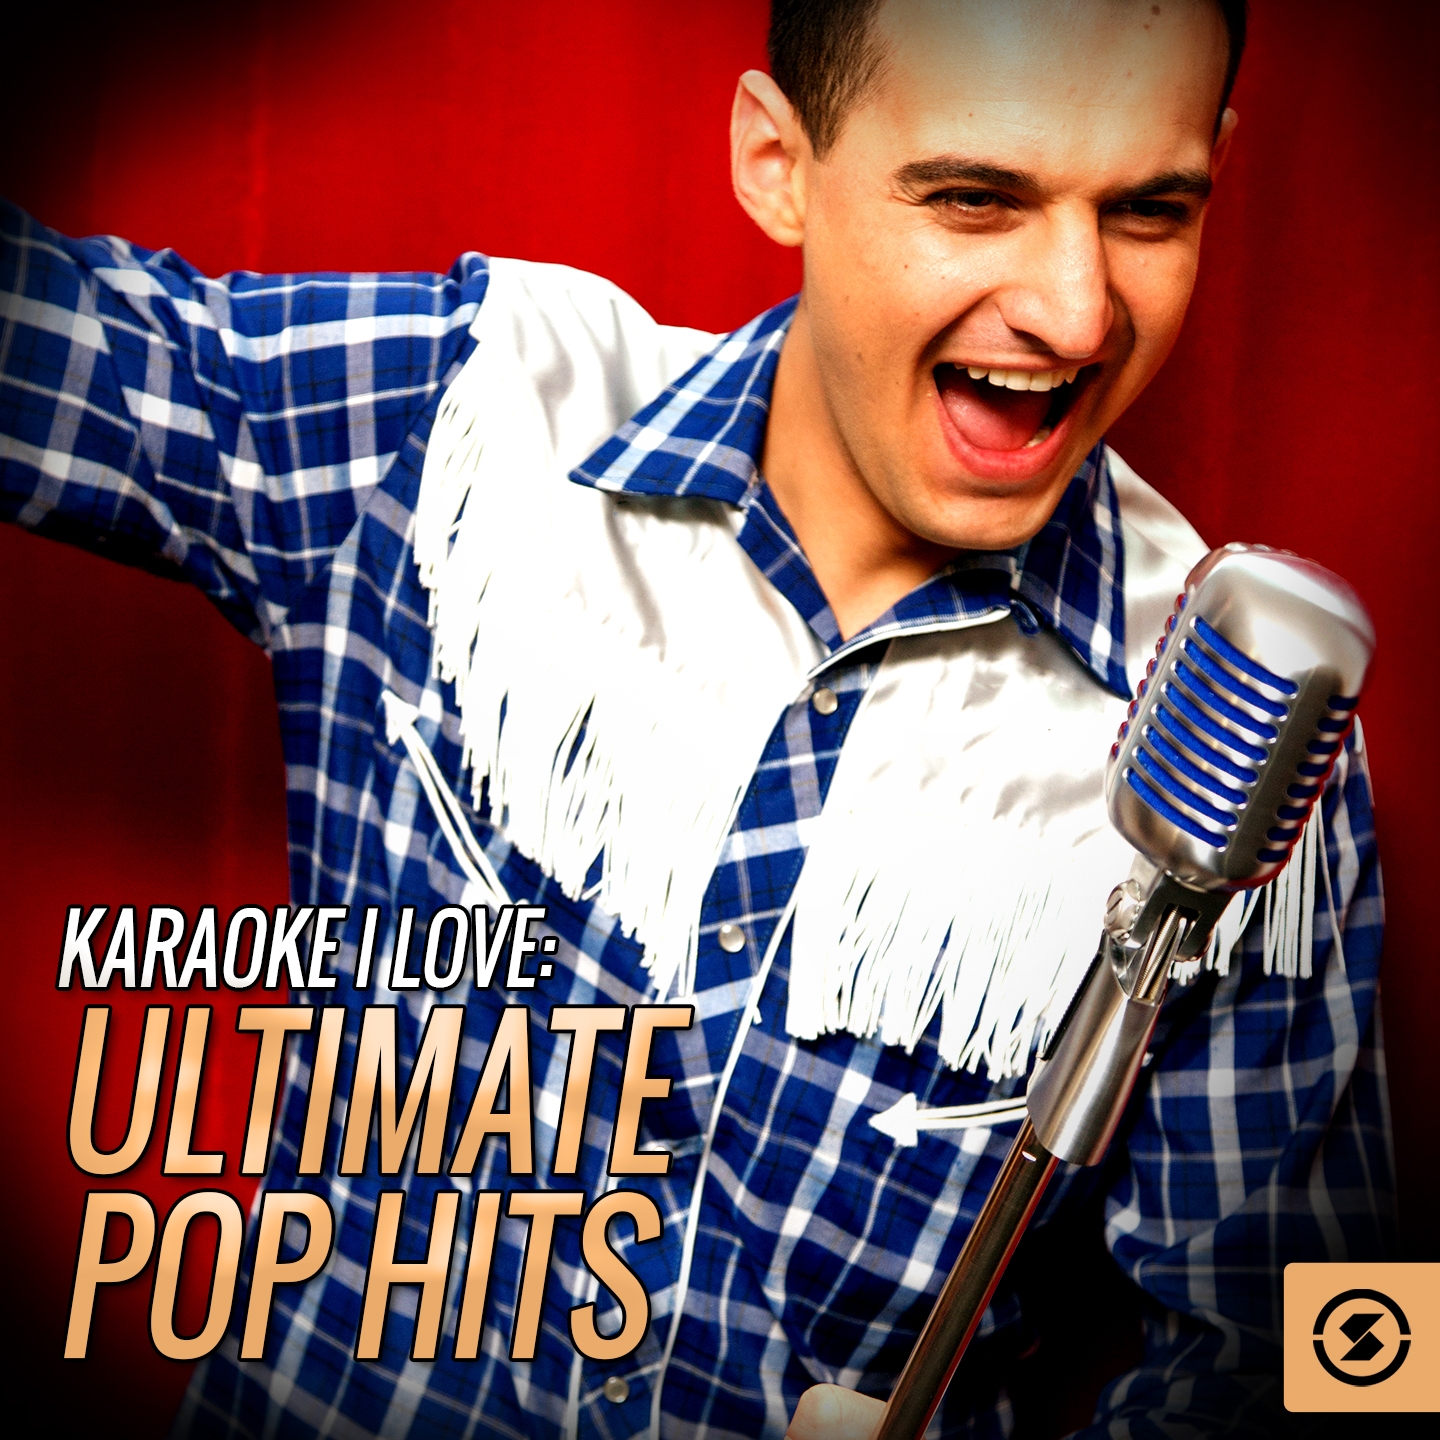 Karaoke I Love: Ultimate Pop Hits